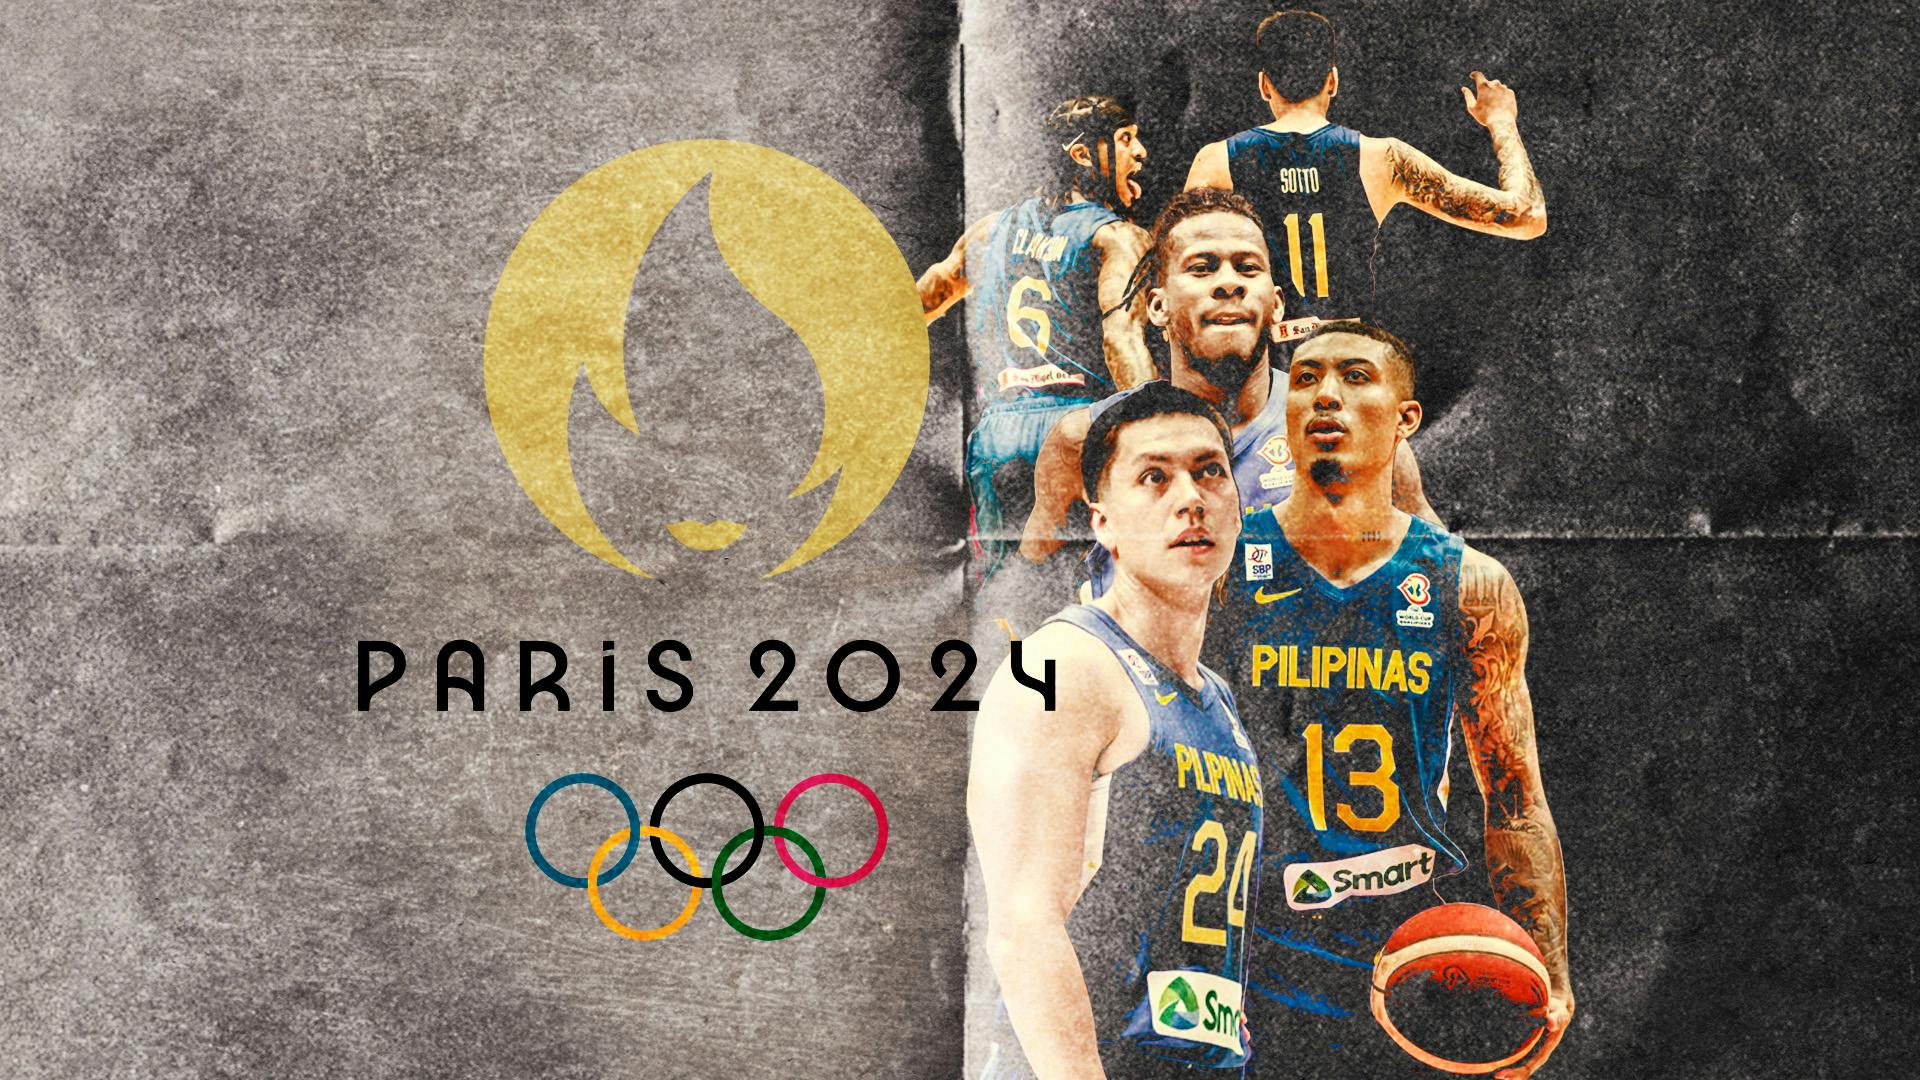 Gilas Pilipinas' Jordan Clarkson to flex ANTA kicks for FIBA World